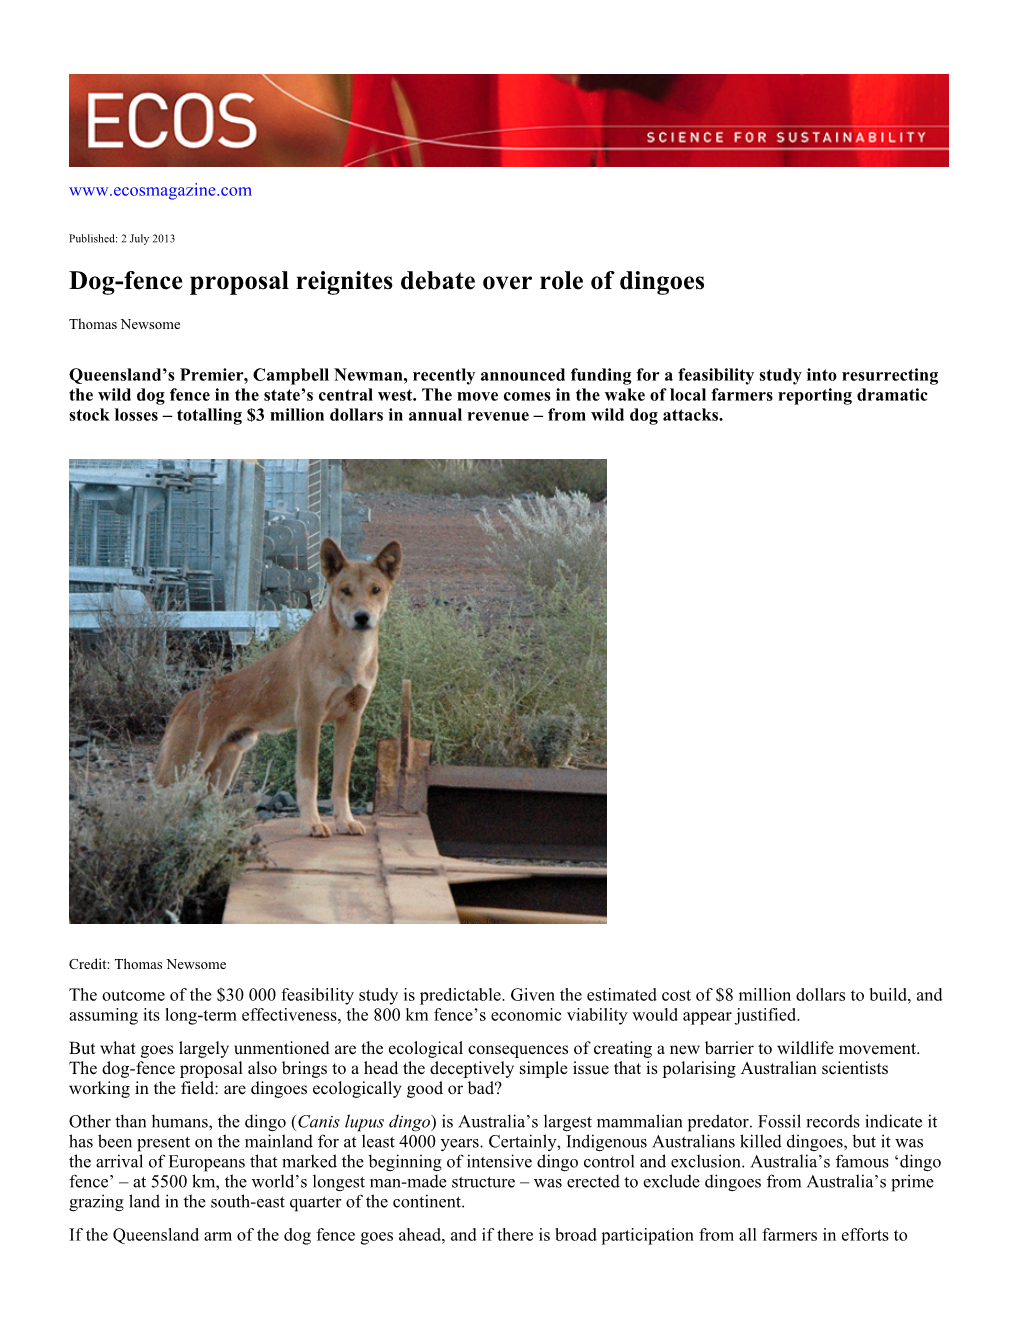 Dog-Fence Proposal Reignites Debate Over Role of Dingoes